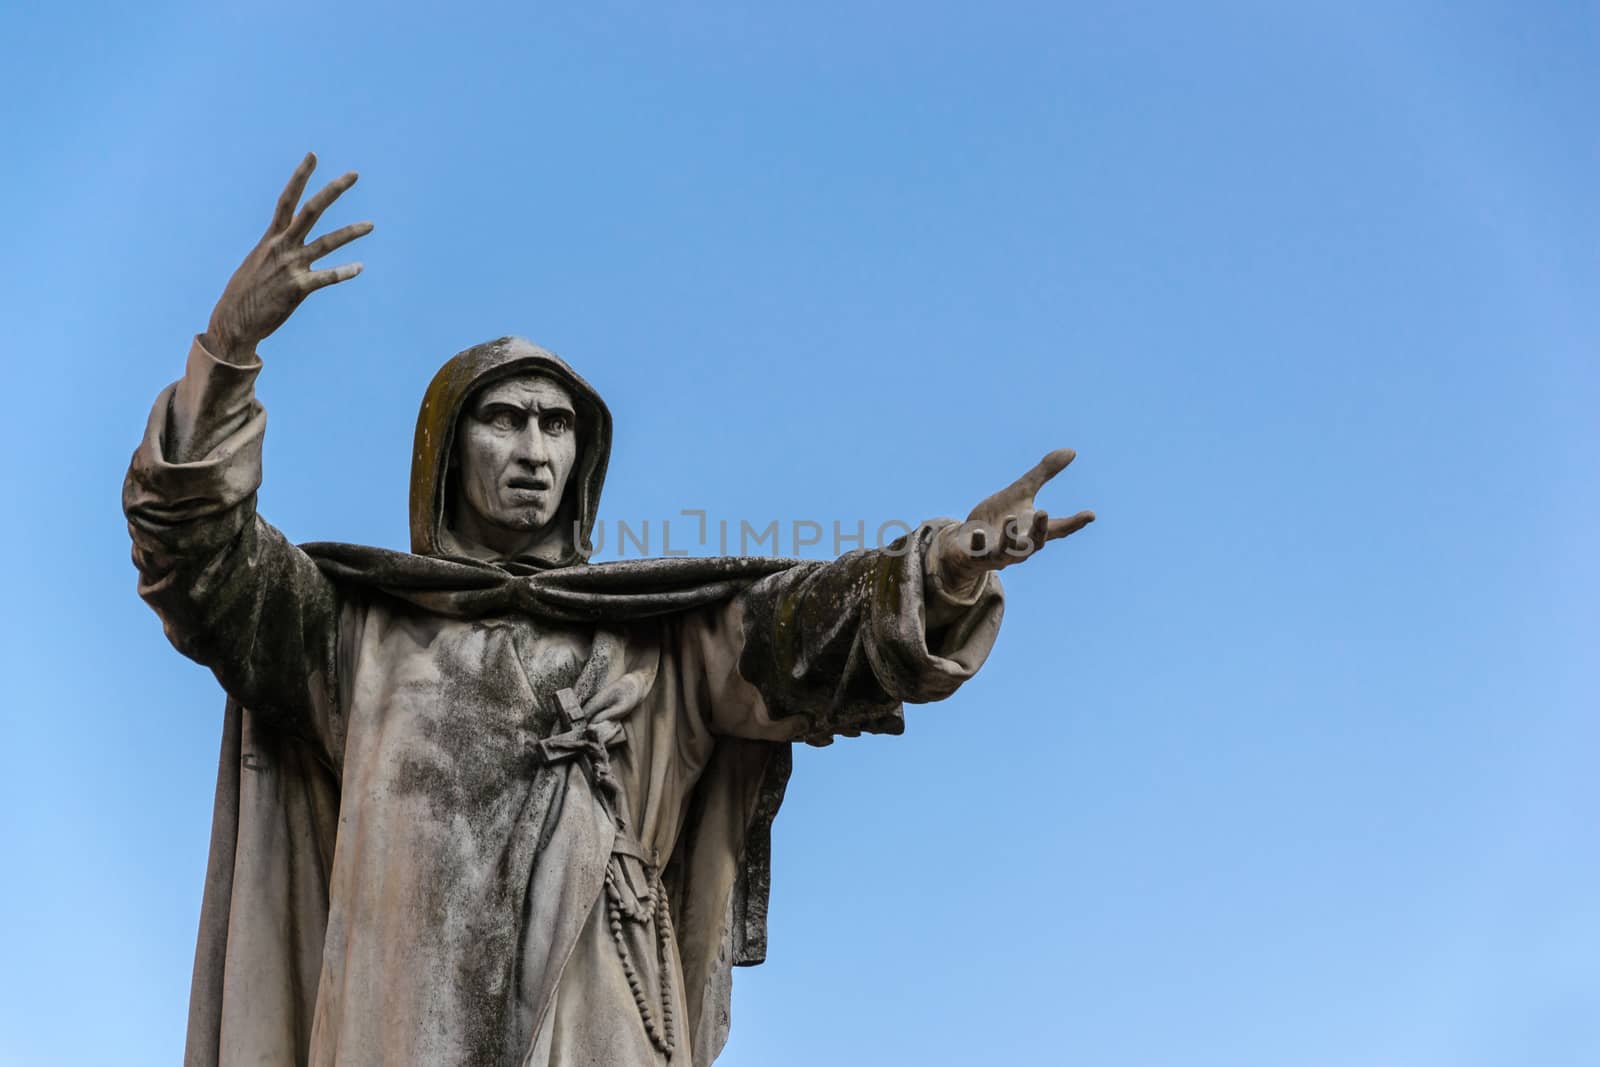 Statue of Girolamo Savonarola in Savonarola square by enrico.lapponi